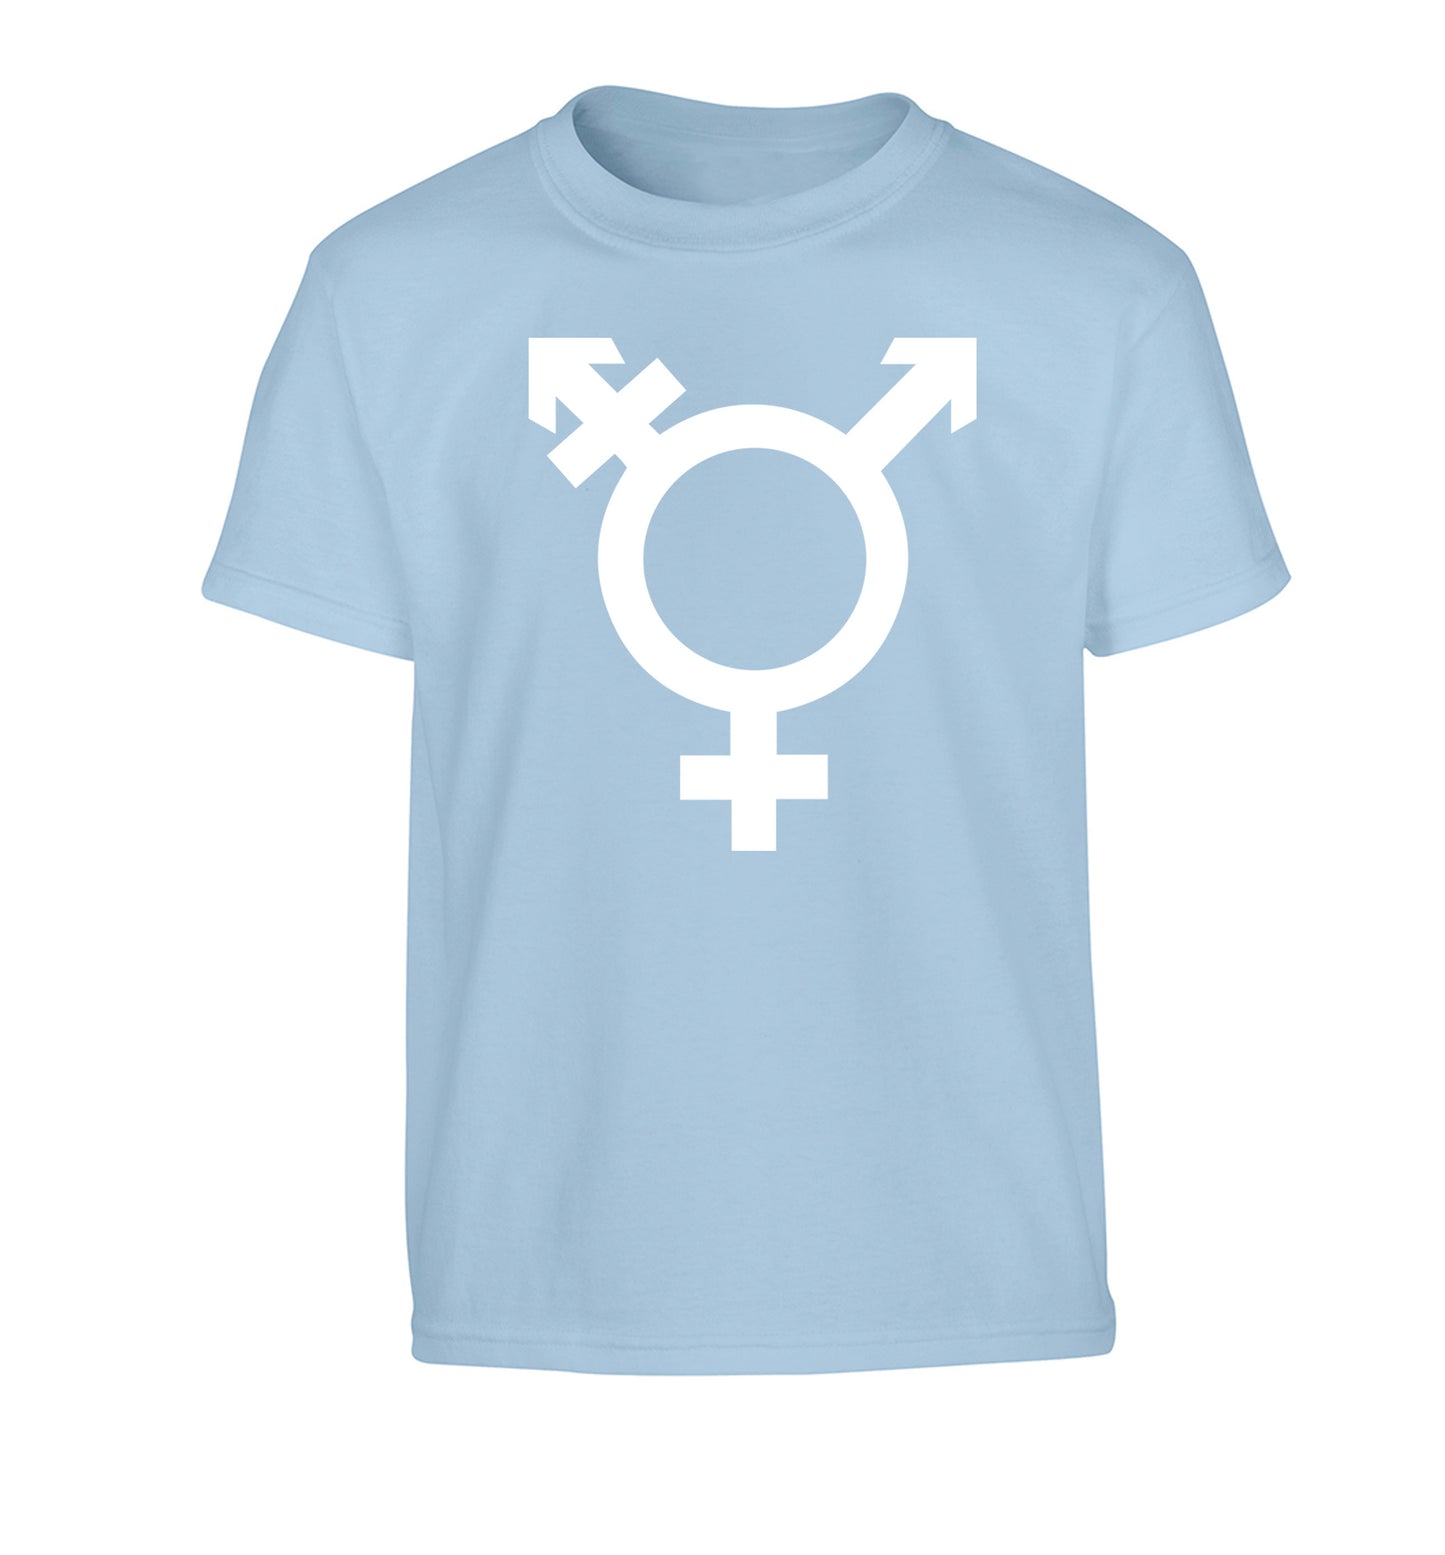 Gender neutral symbol large Children's light blue Tshirt 12-14 Years